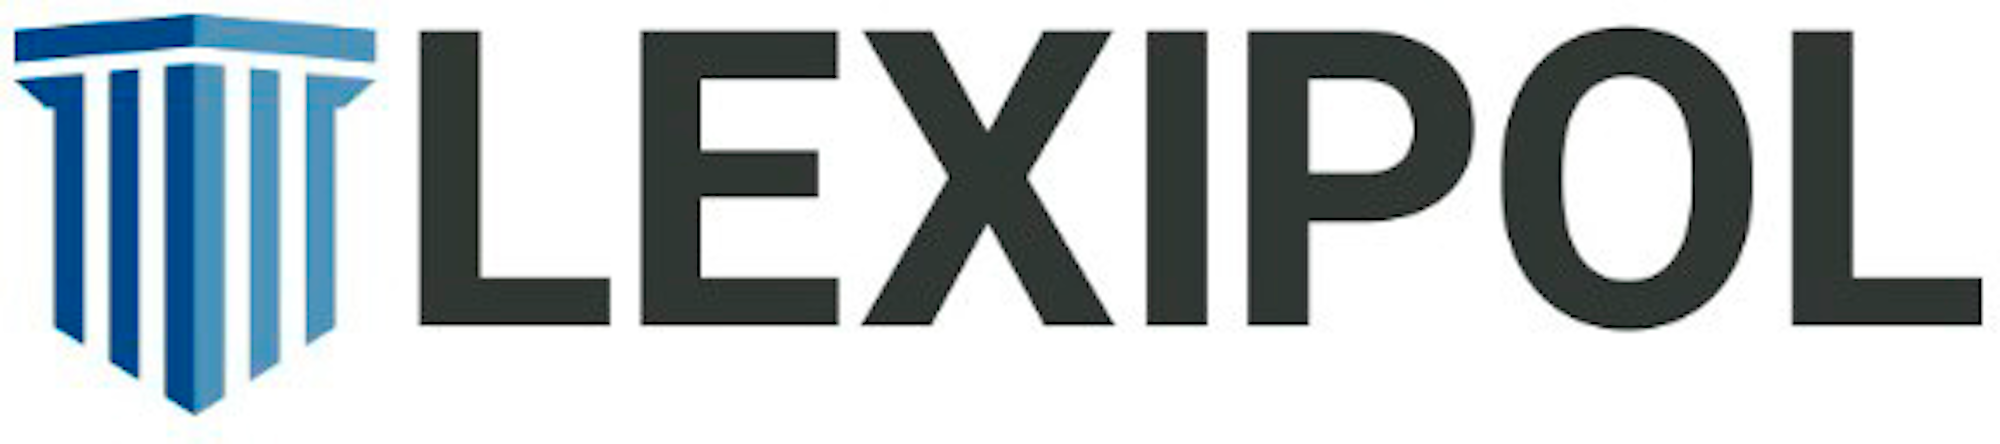 Lexipol Announces New Logo, Tagline and Website | Firehouse